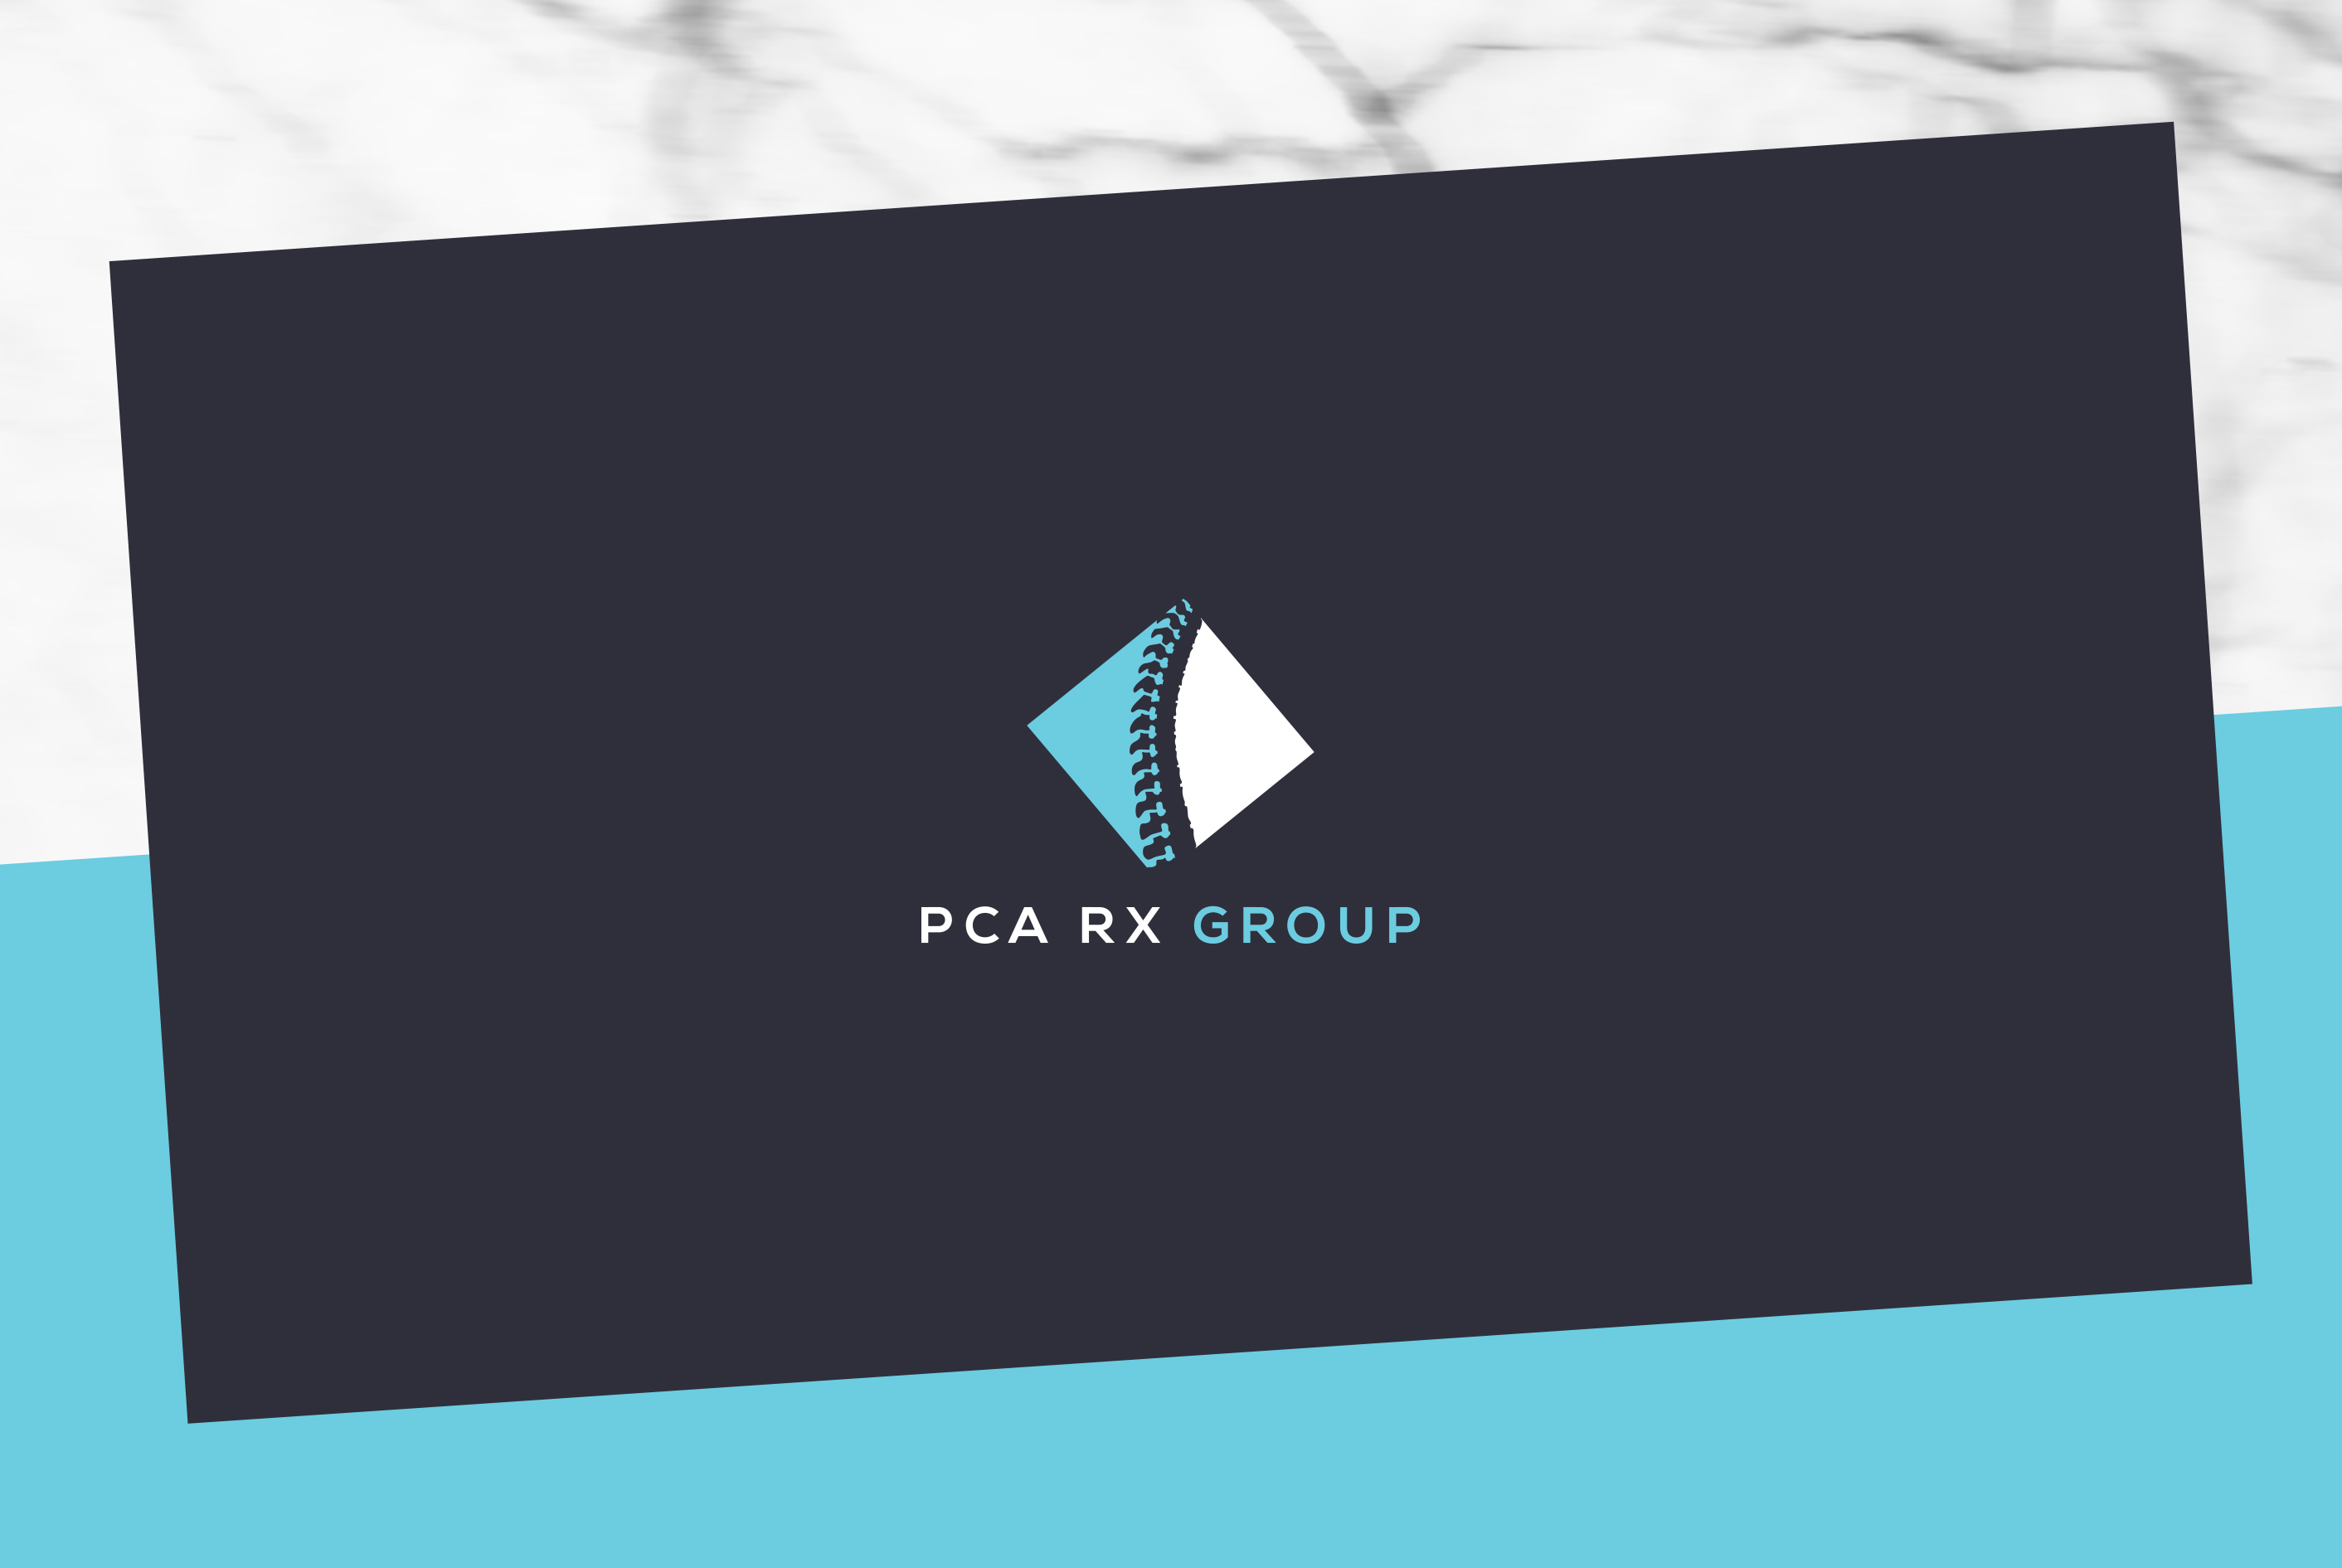 PCA Rx Group Design #2